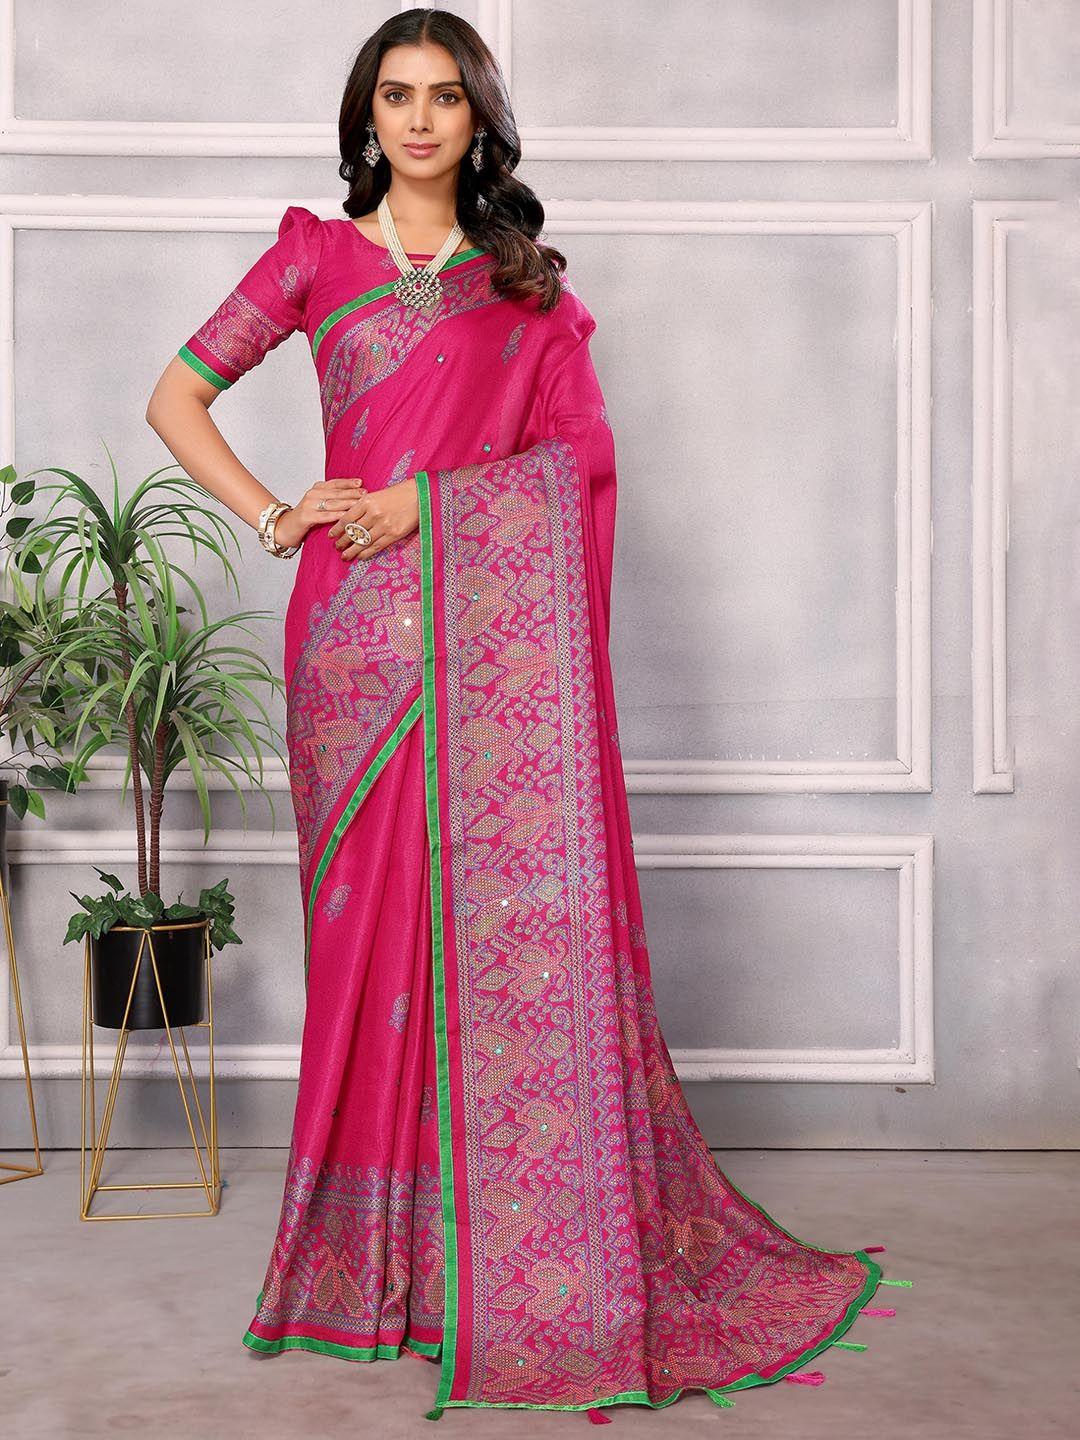 here&now pink floral jute silk designer saree